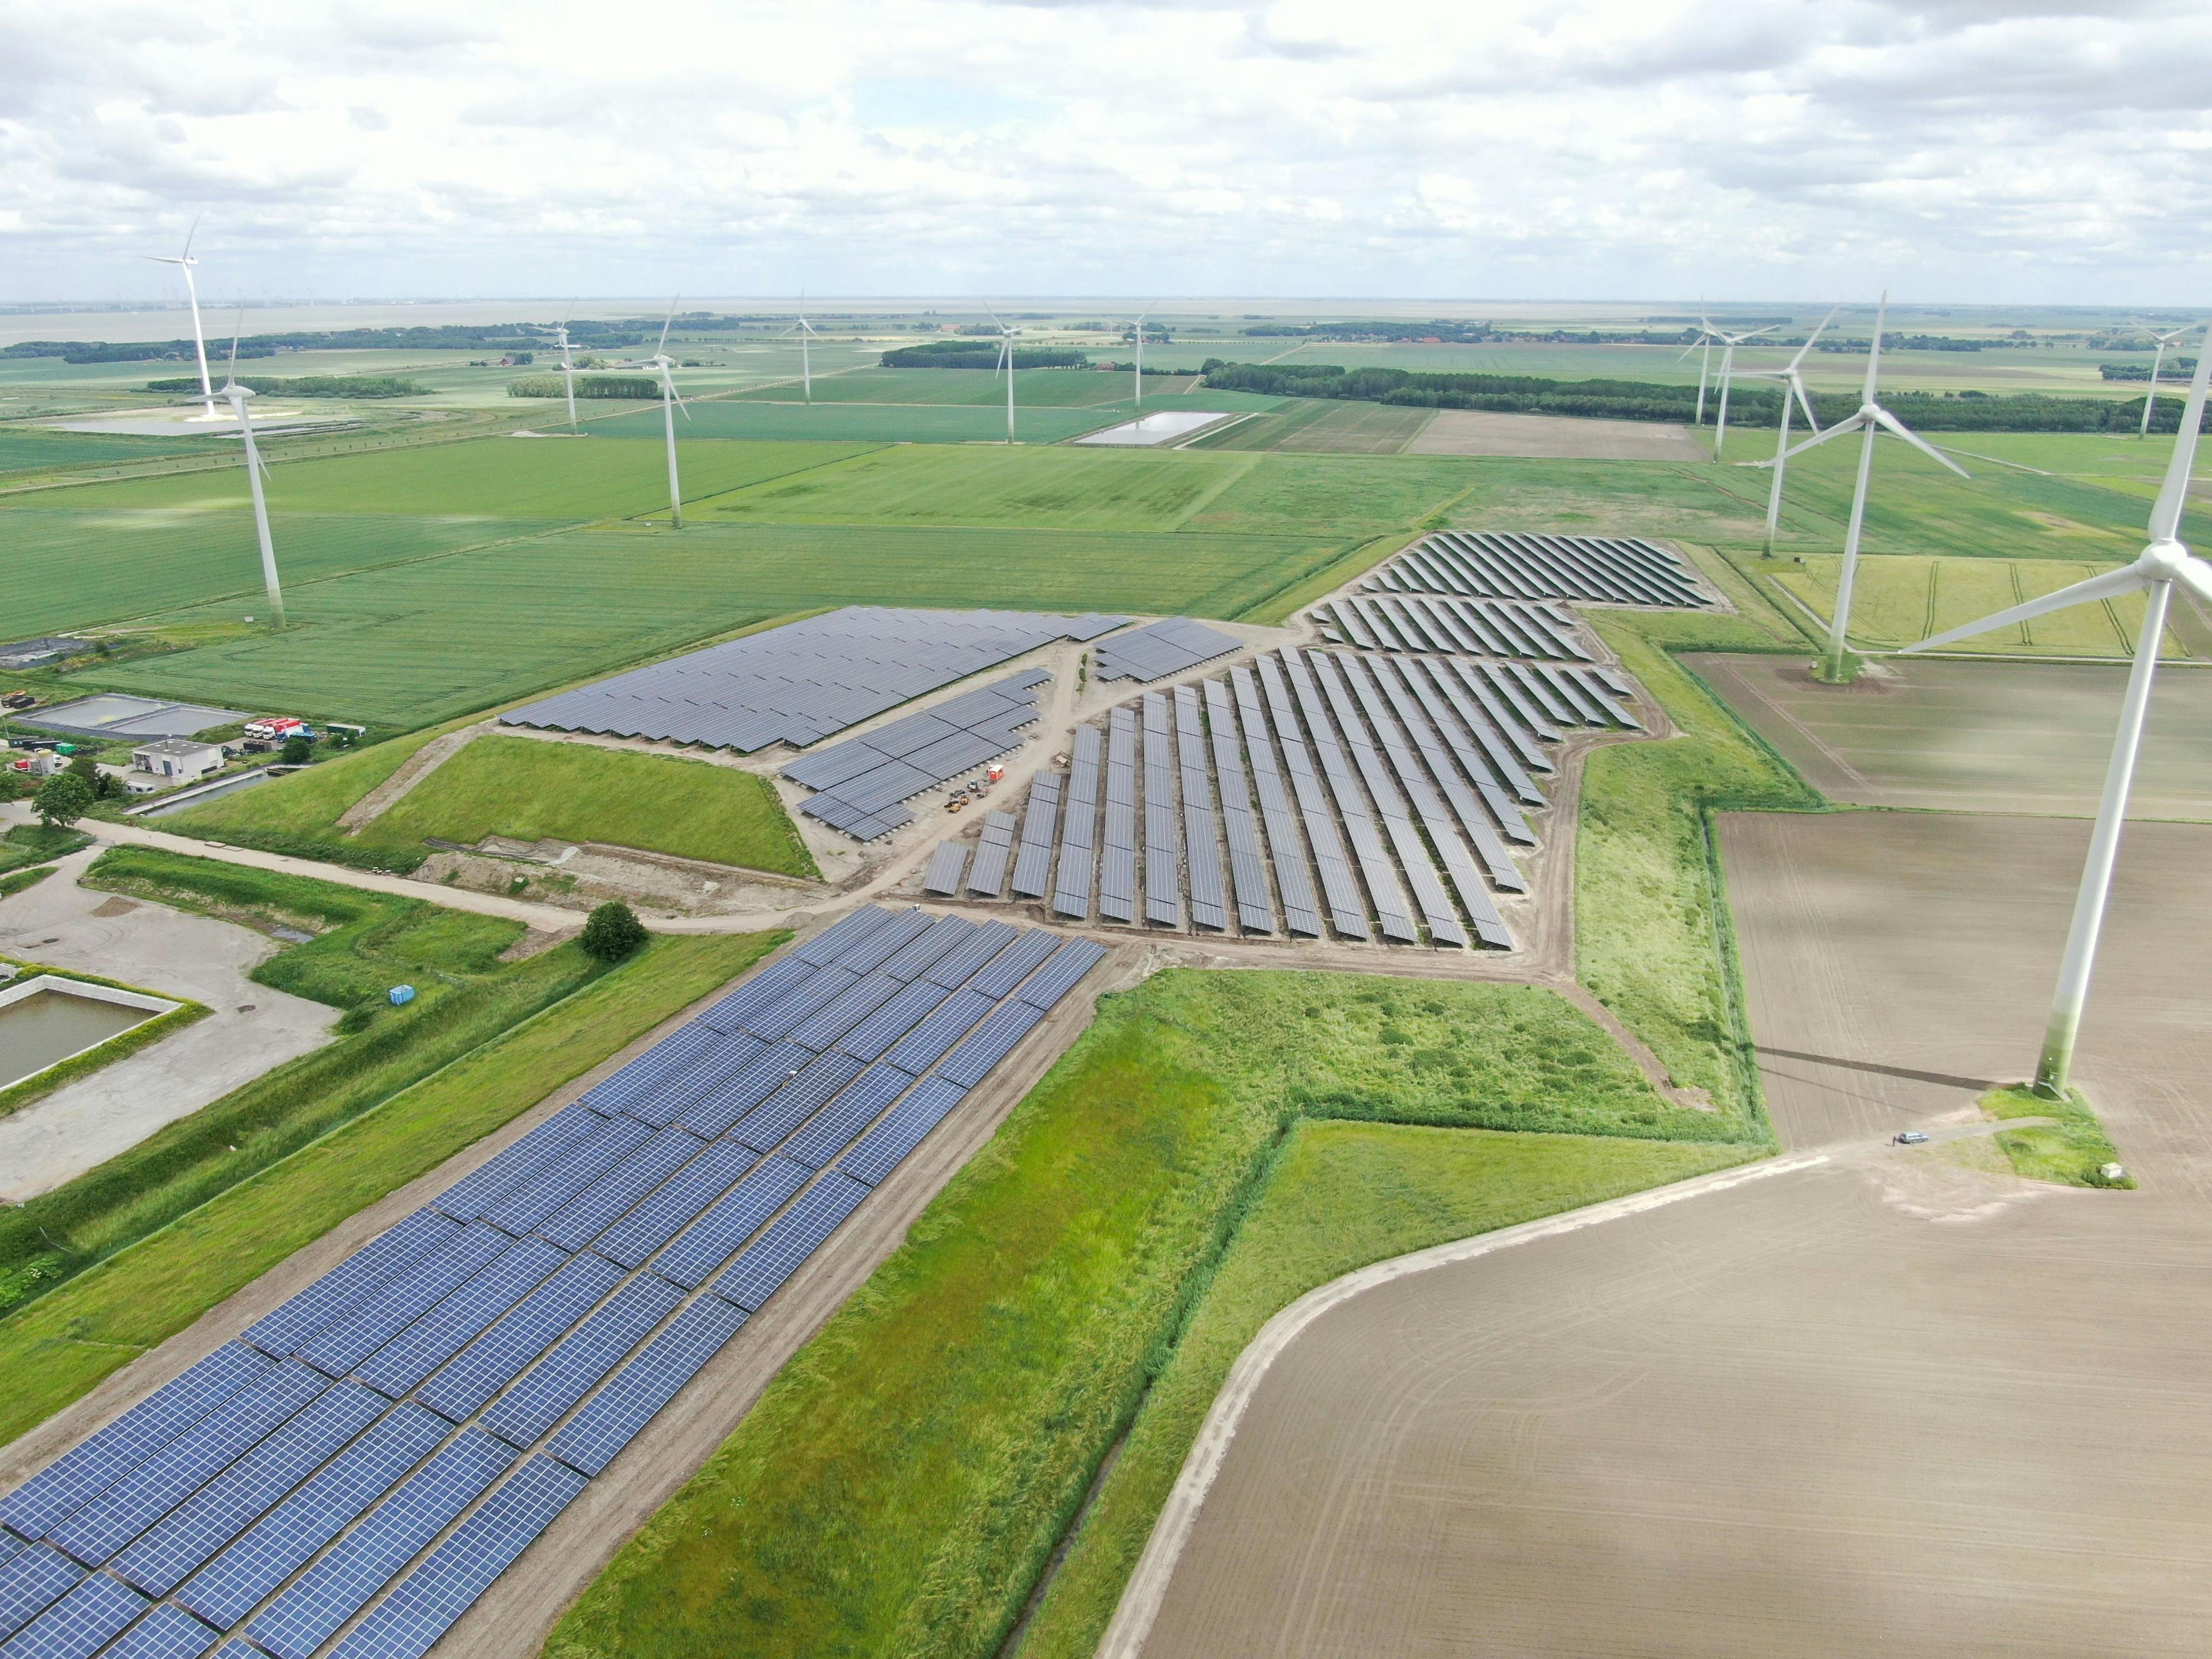 Farmsum freefield project in the Netherlands, taken by drone